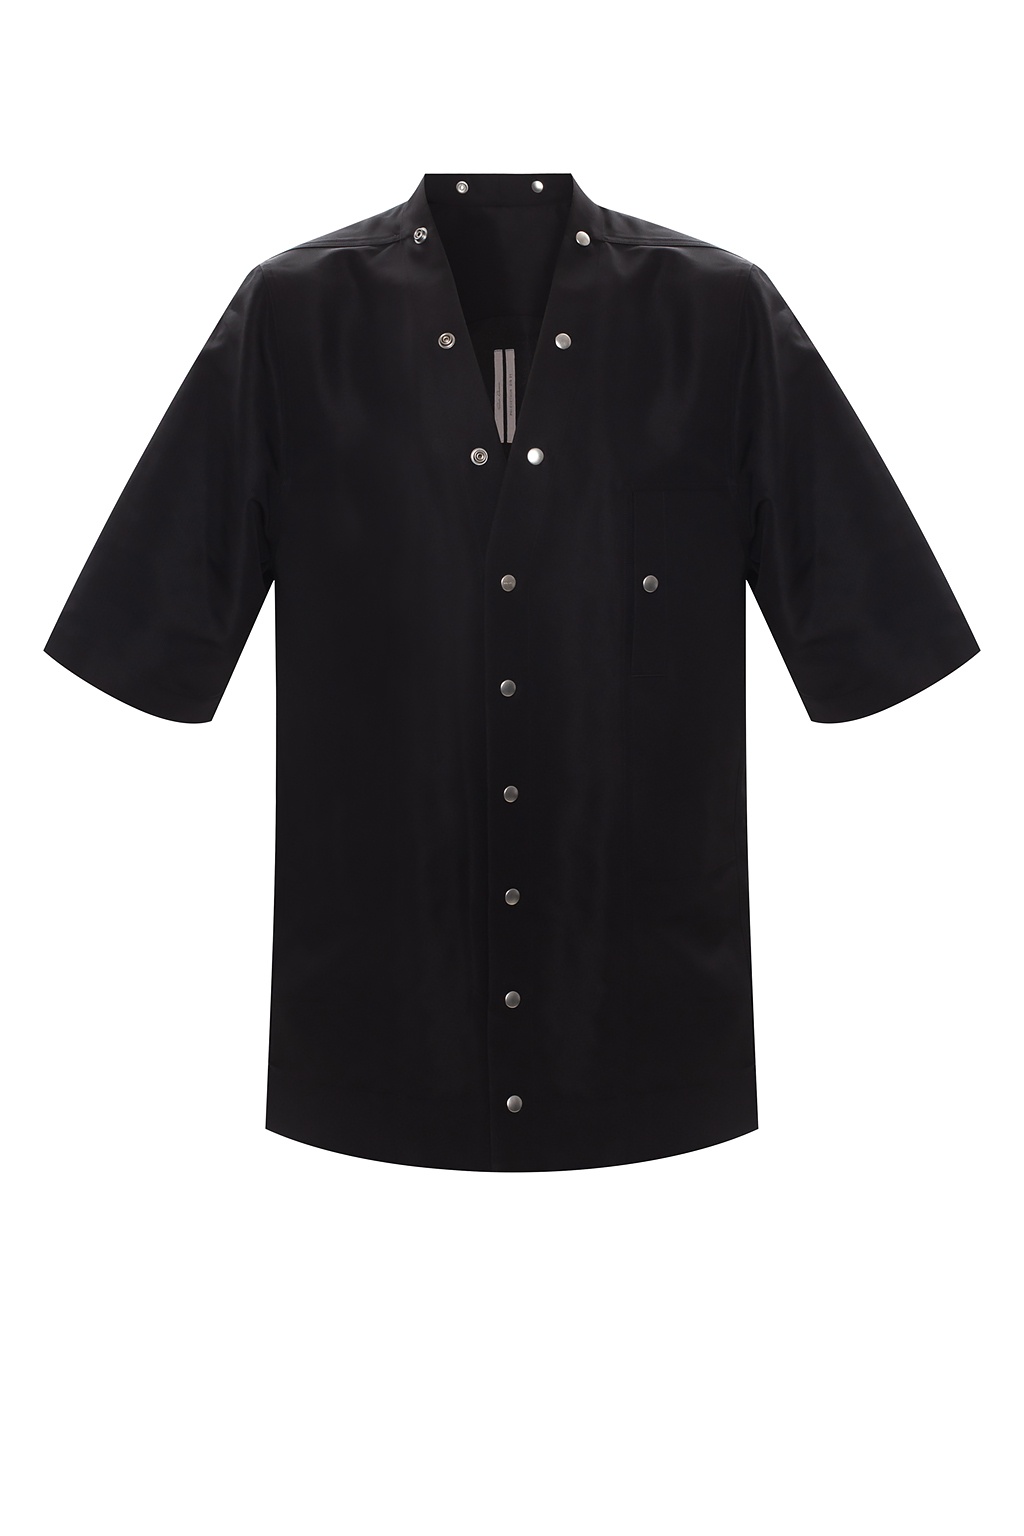 Skywriting Arleth Shirt Dress - Black Short - GenesinlifeShops Sweden -  sleeved shirt Rick Owens